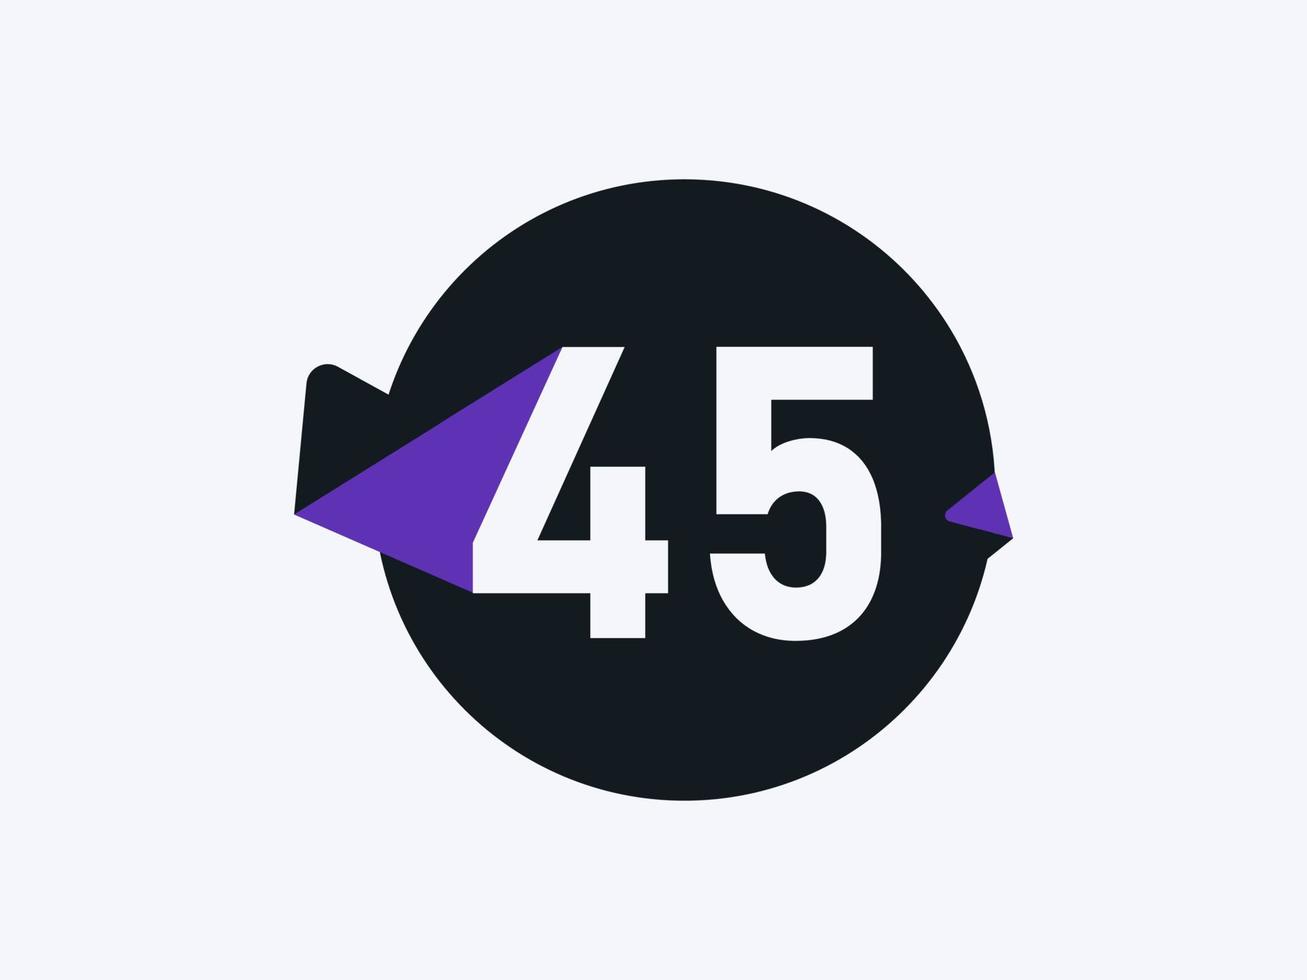 45 Number logo icon design vector image. Number logo icon design vector image